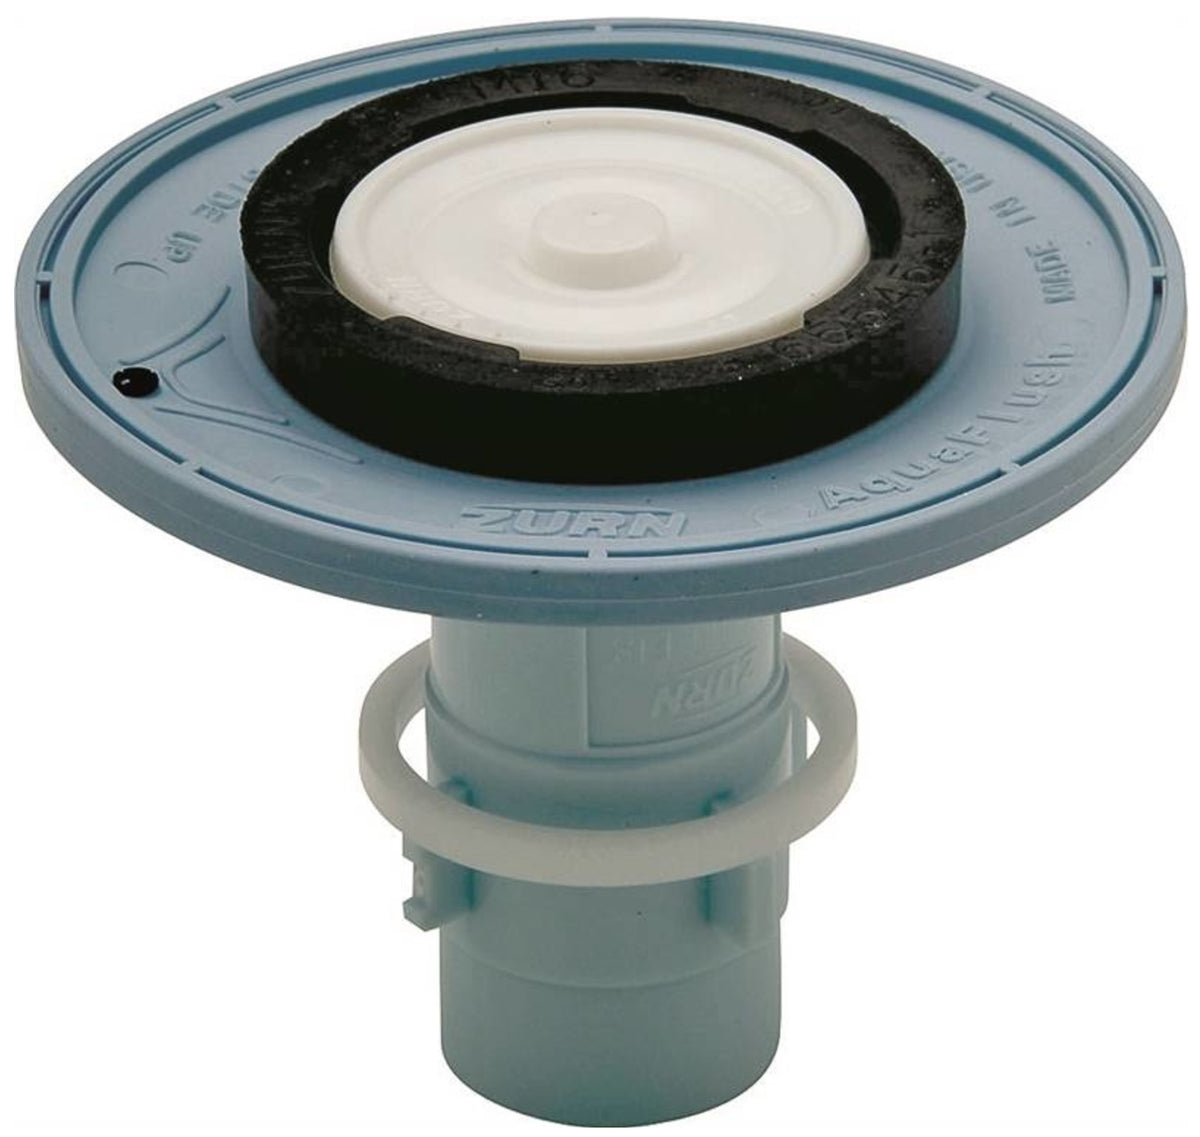 Zurn P6000-ECR-WS1 AquaFlush Toilet Repair Kit, 1.6 GPF